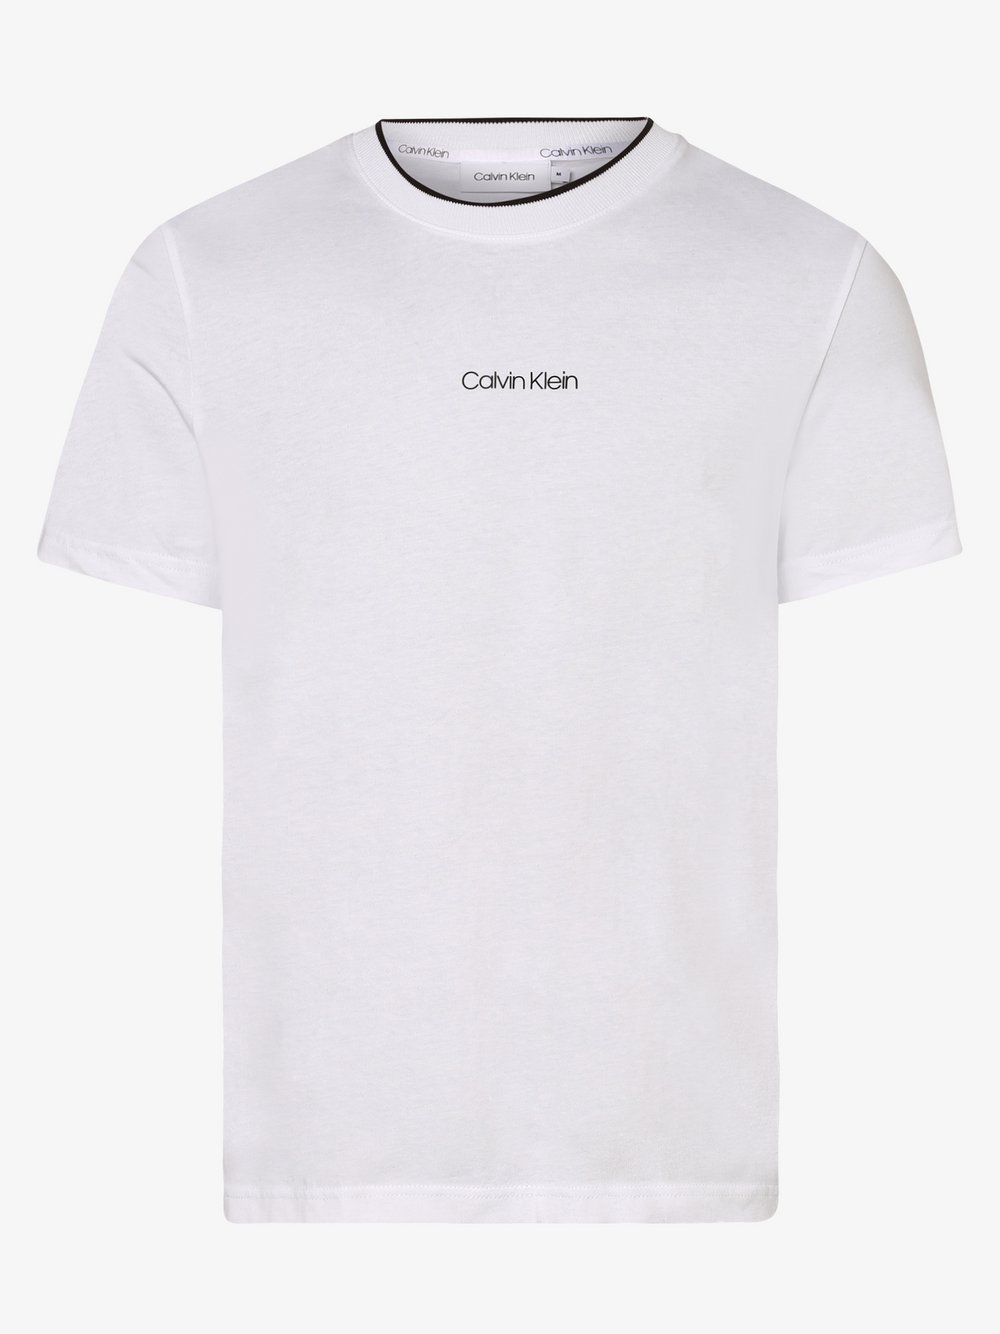 Calvin Klein - T-shirt męski, biały